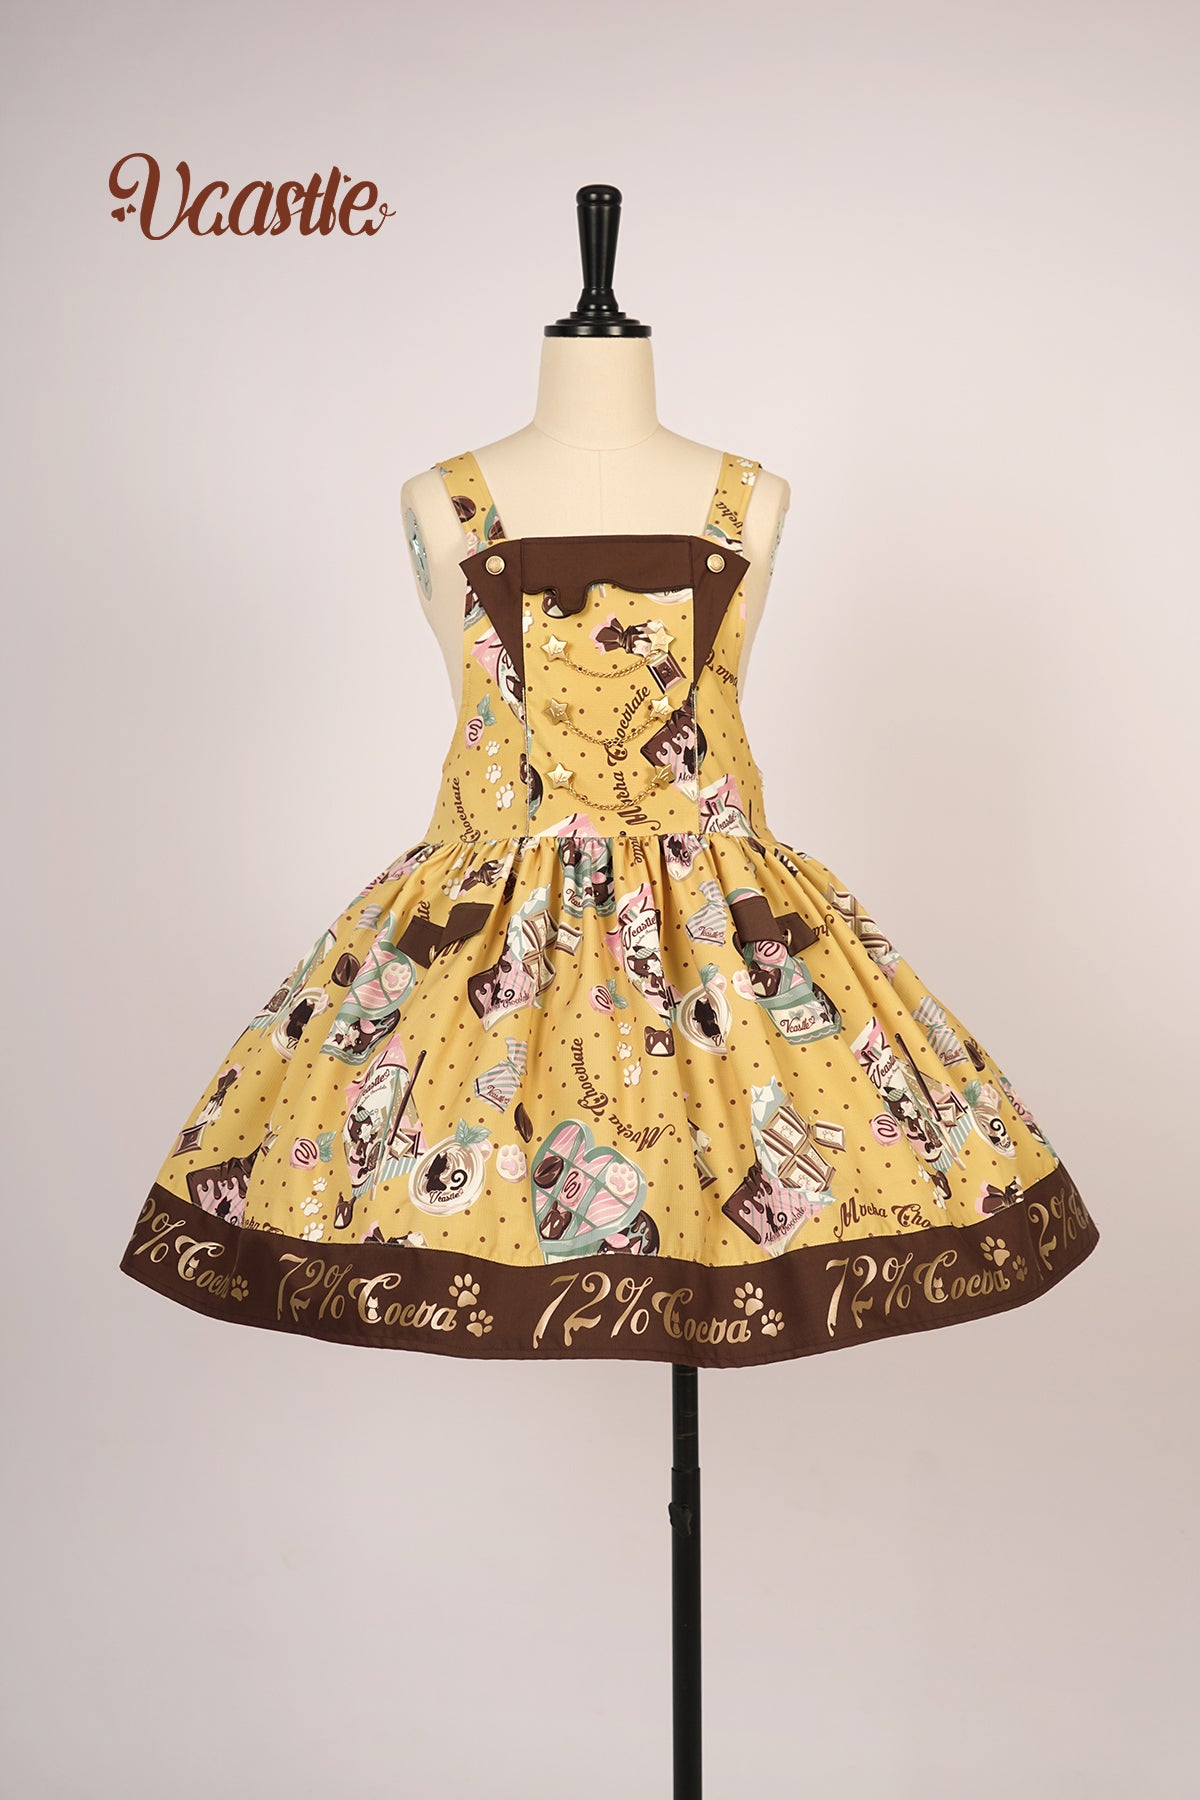 Vcastle~Mocha Choc~Kawaii Lolita OP Dress Multicolors S yellow suspender skirt 